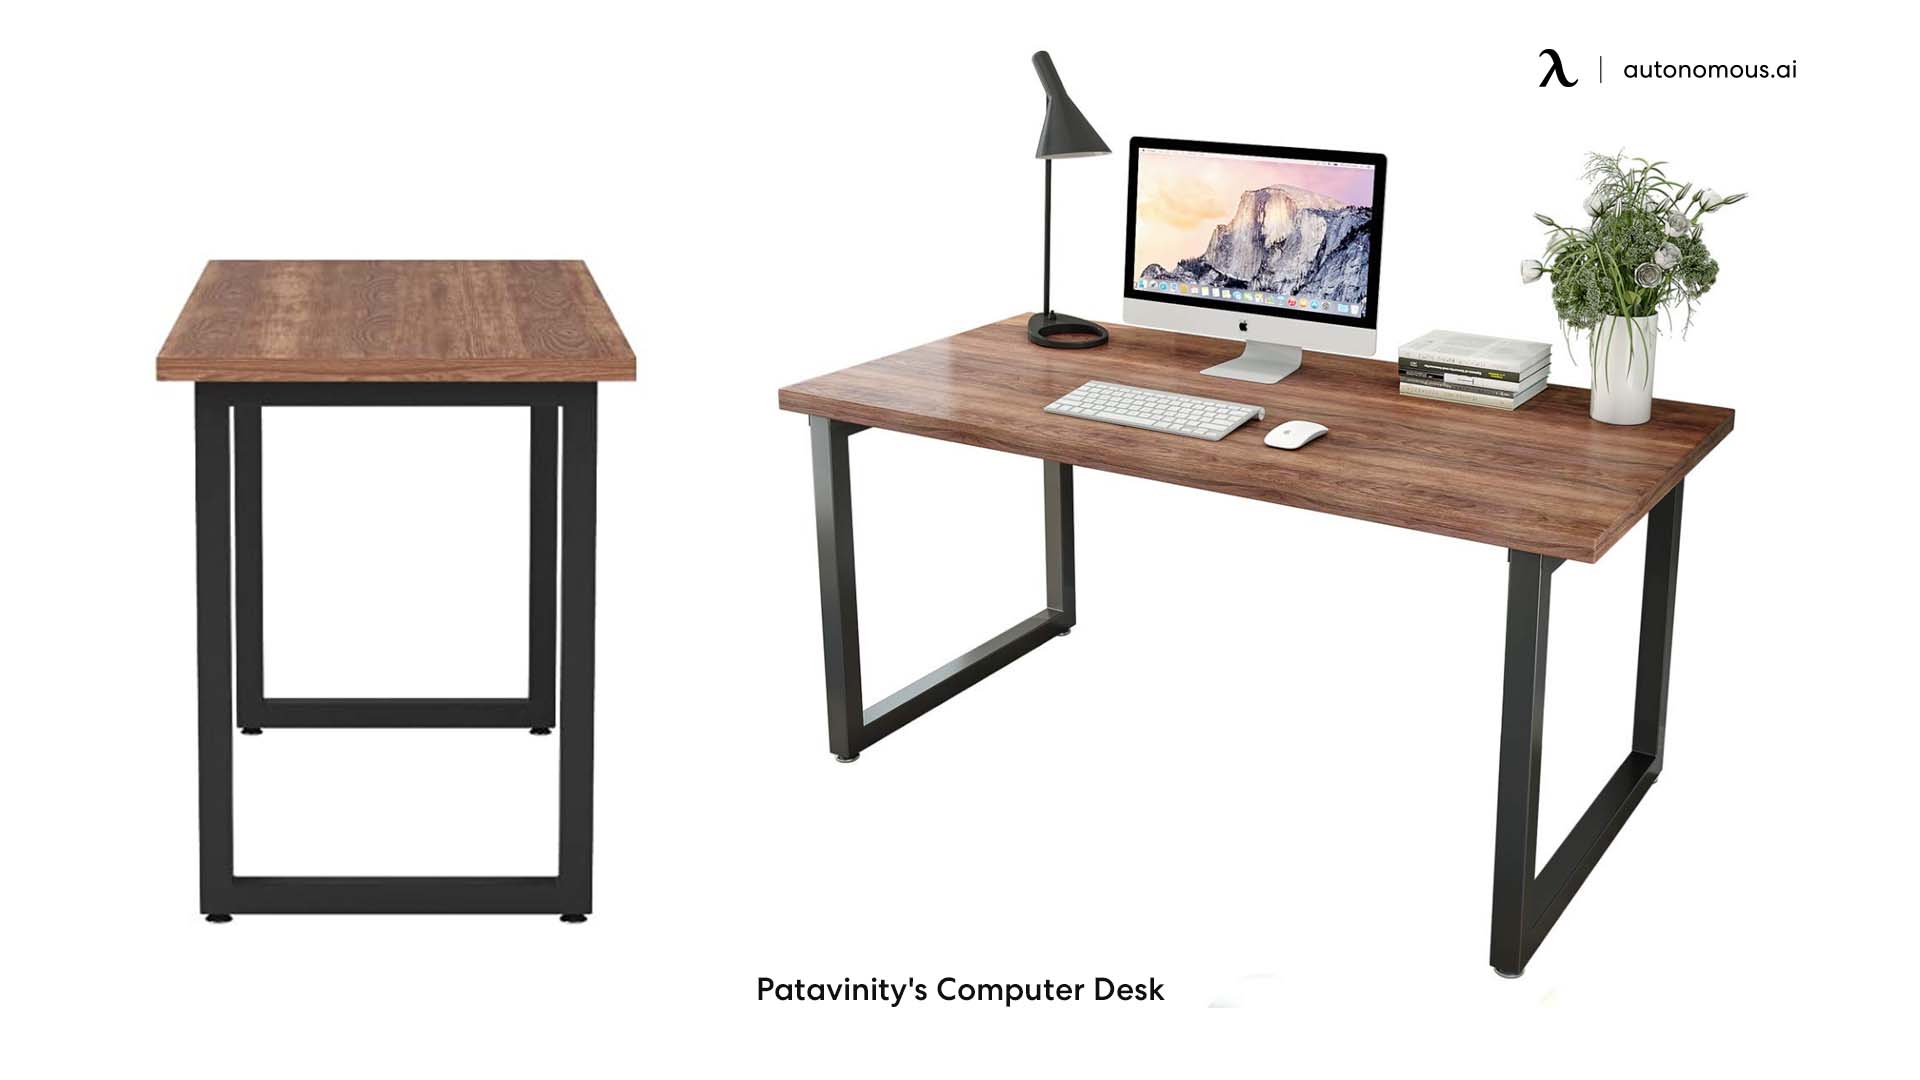 Patavinity's wood and metal desk